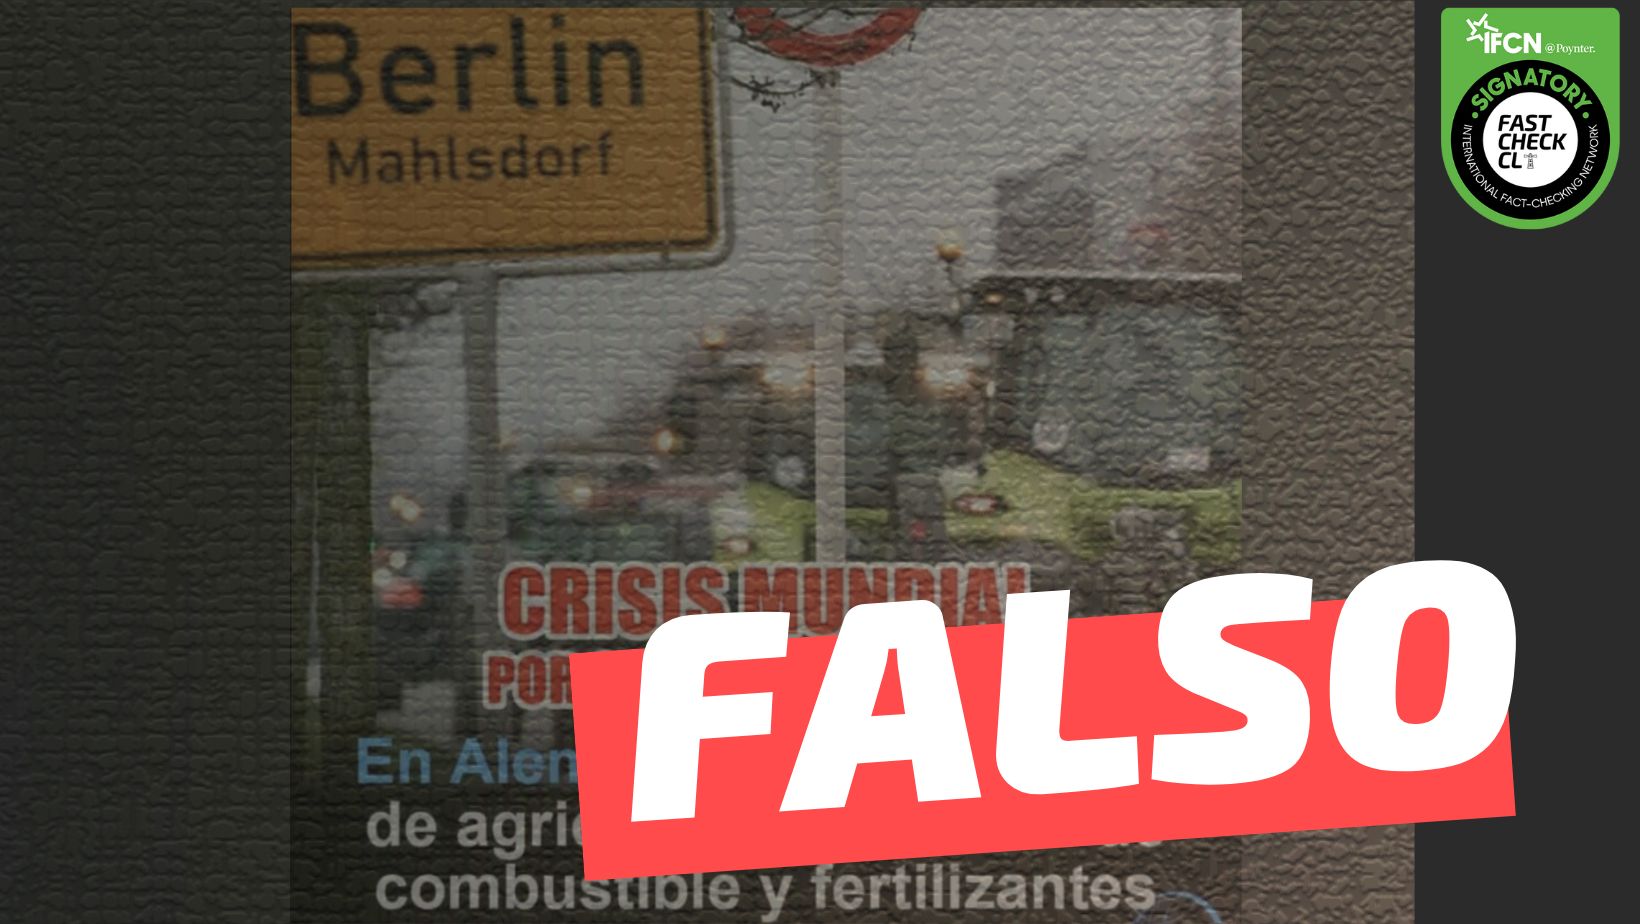 You are currently viewing (Imagen) “Alemania: Estalla huelga de agricultores por falta de combustible y fertilizantes”: #Falso